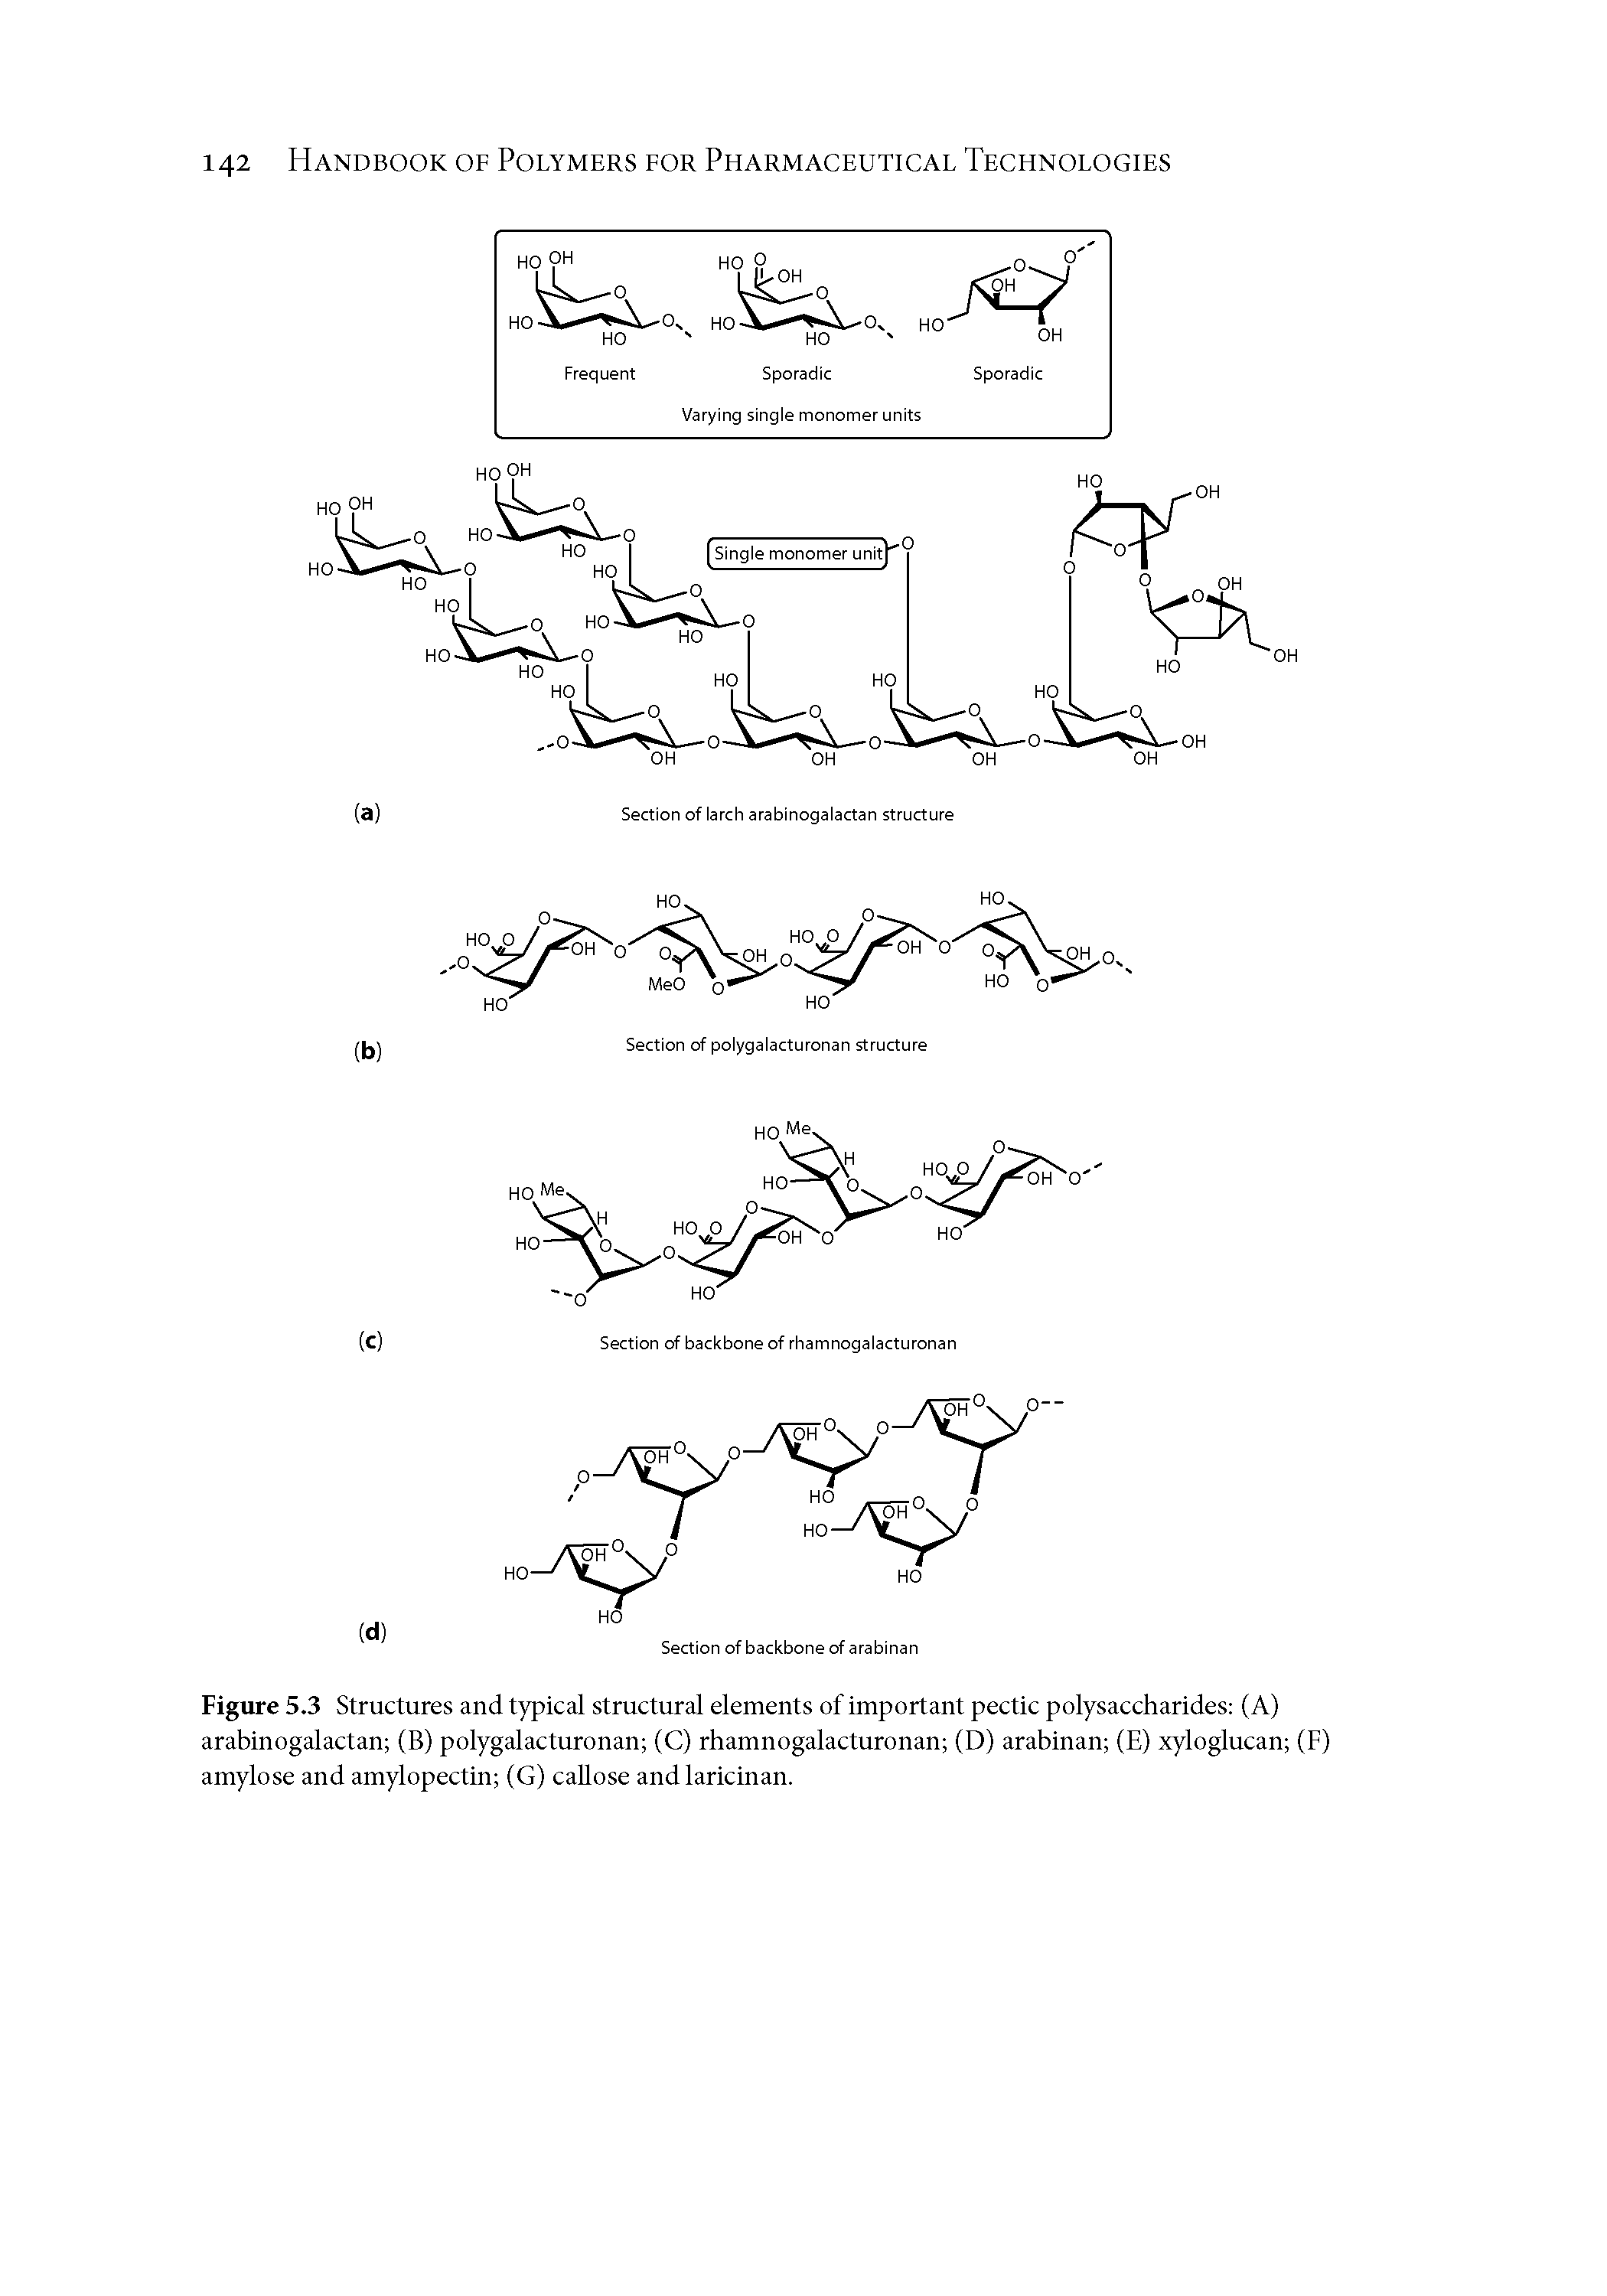 Figure 5.3 Structures and typical structural elements of important pectic polysaccharides (A) arabinogalactan (B) polygalacturonan (C) rhamnogalacturonan (D) arabinan (E) xyloglucan (F) amylose and amylopectin (G) caUose and laricinan.